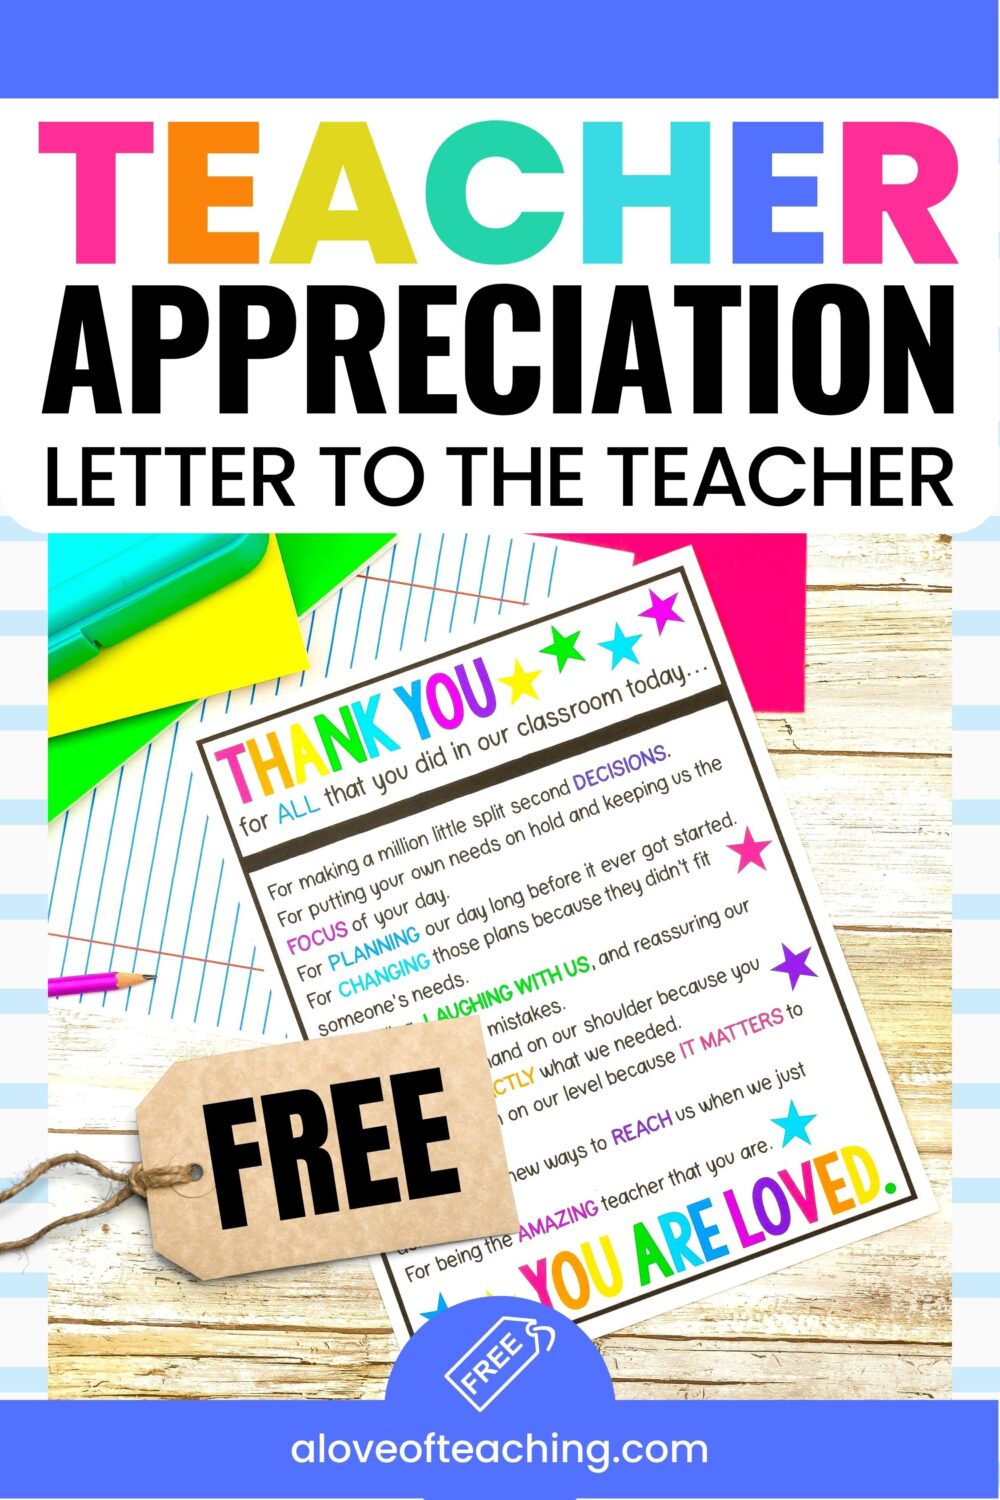 Teacher Appreciation: A FREE LETTER to the Teacher